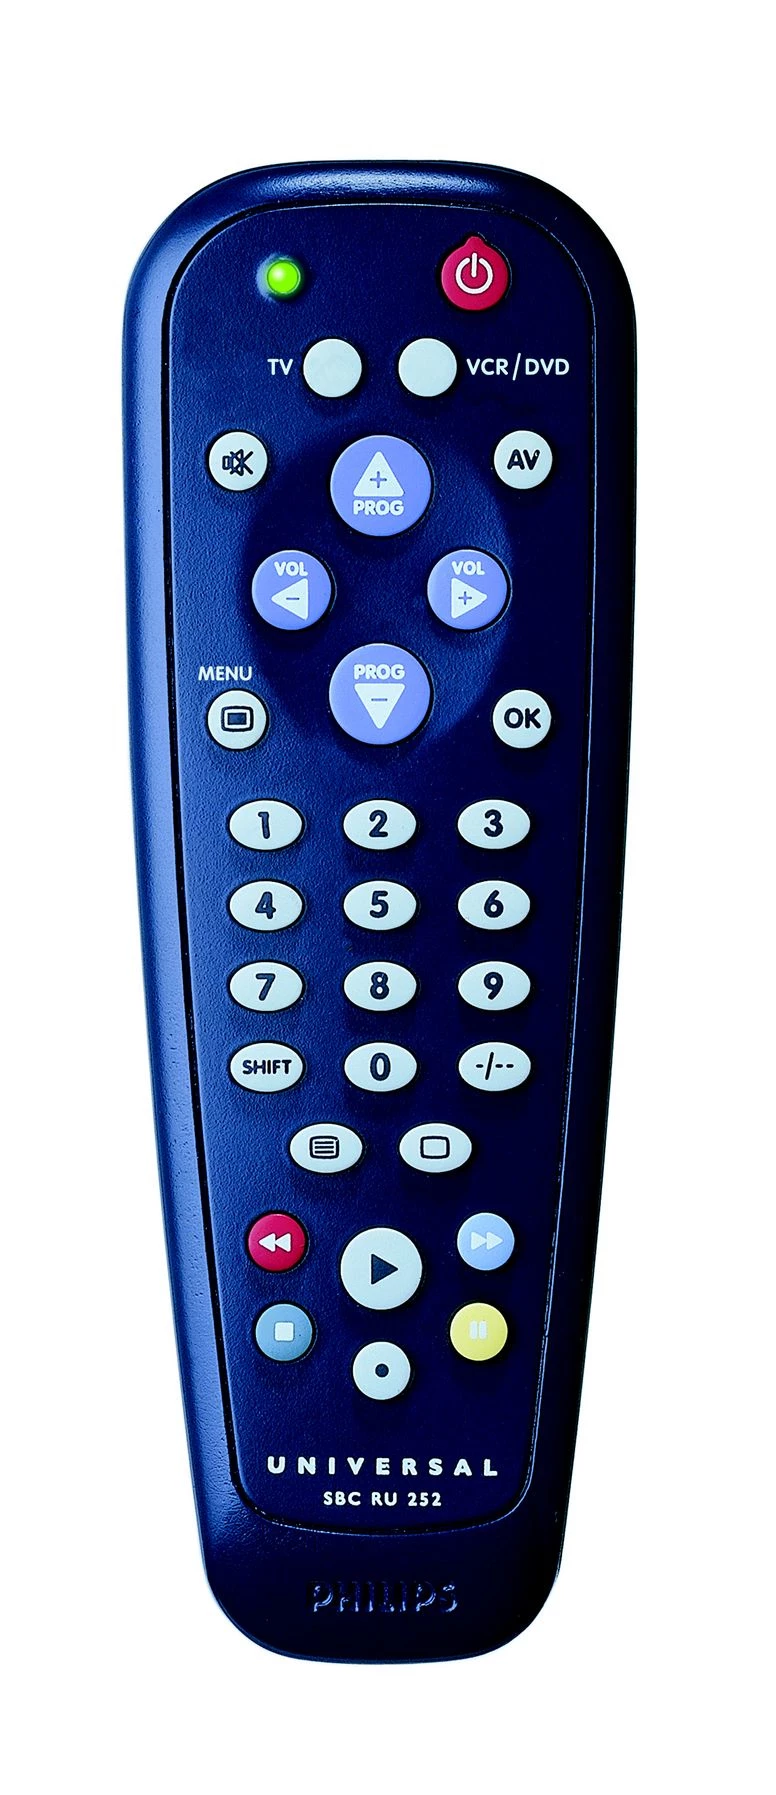 Philips Universal remote control SBCRU252/00H